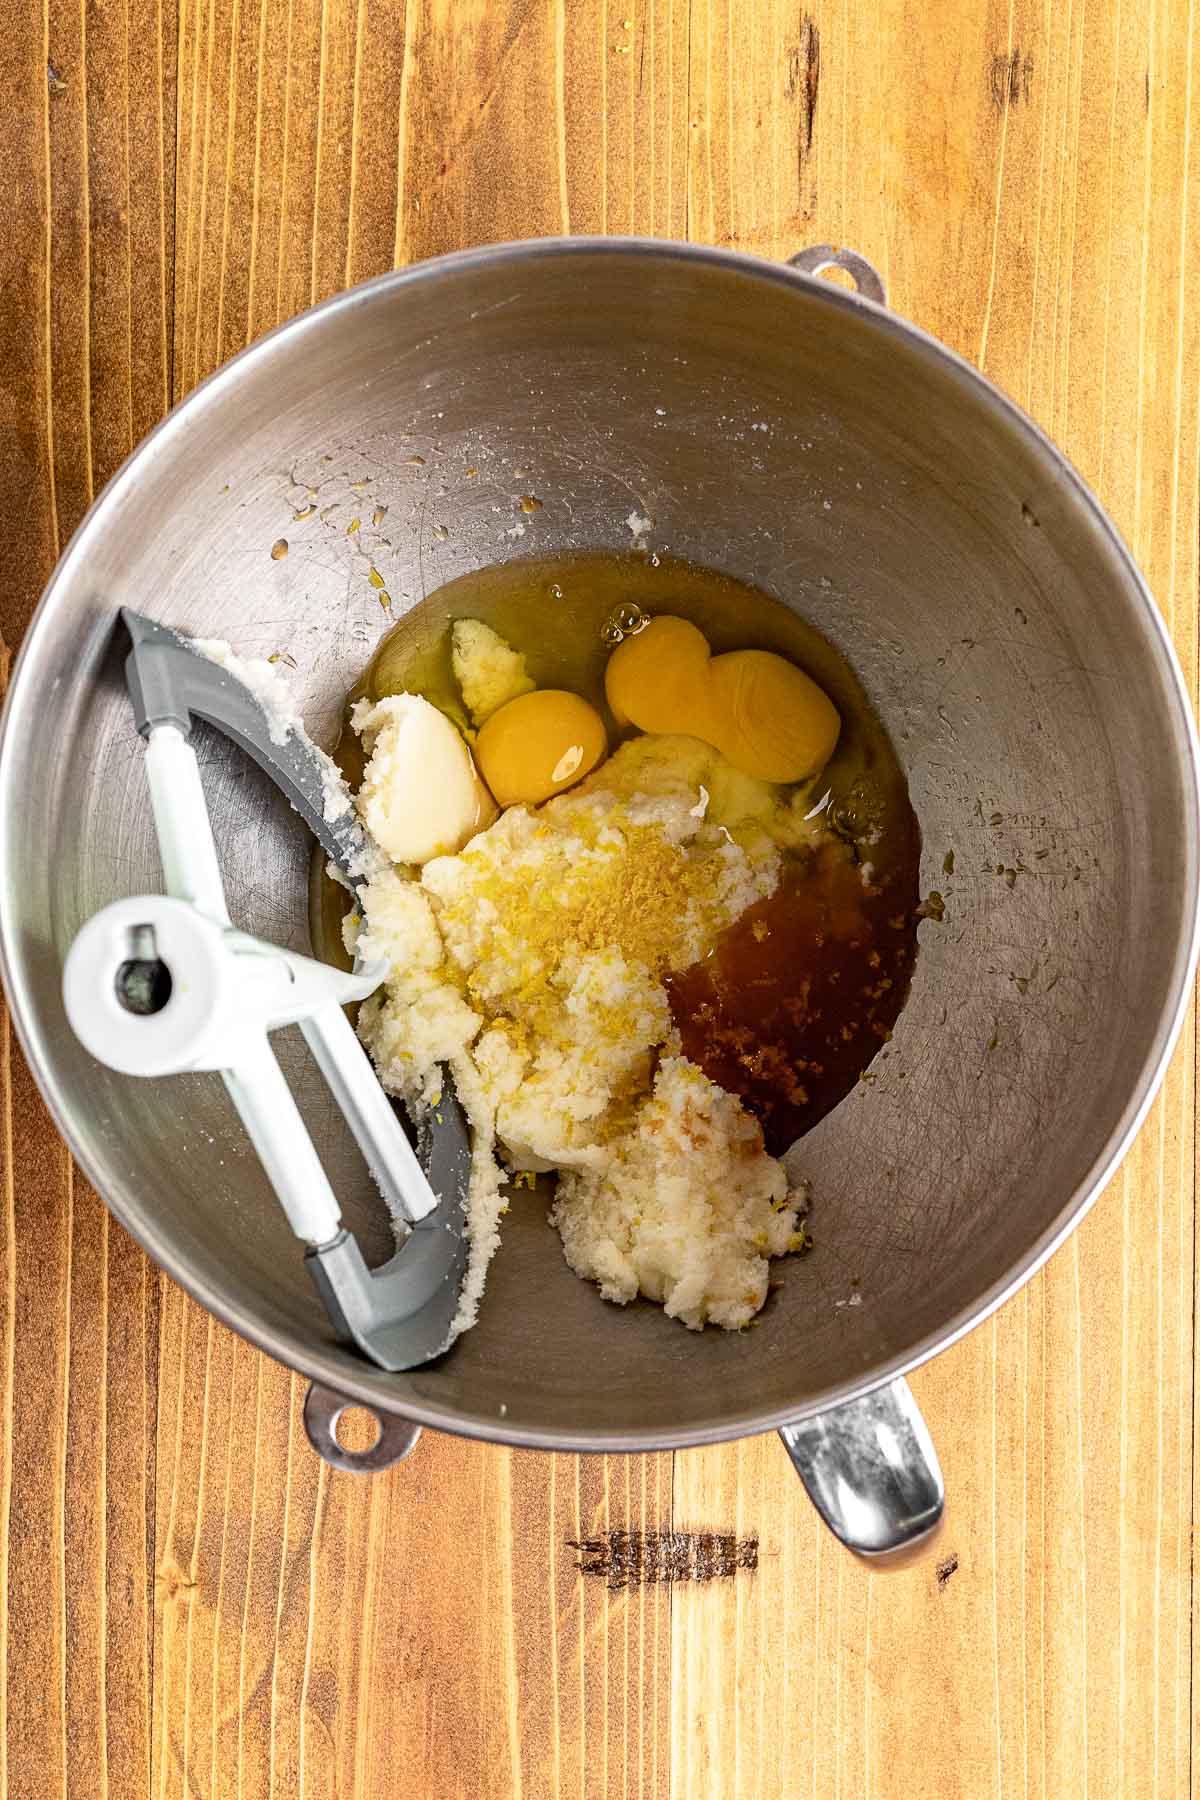 Cranberry Lemon Bread wet ingredients in mixing bowl